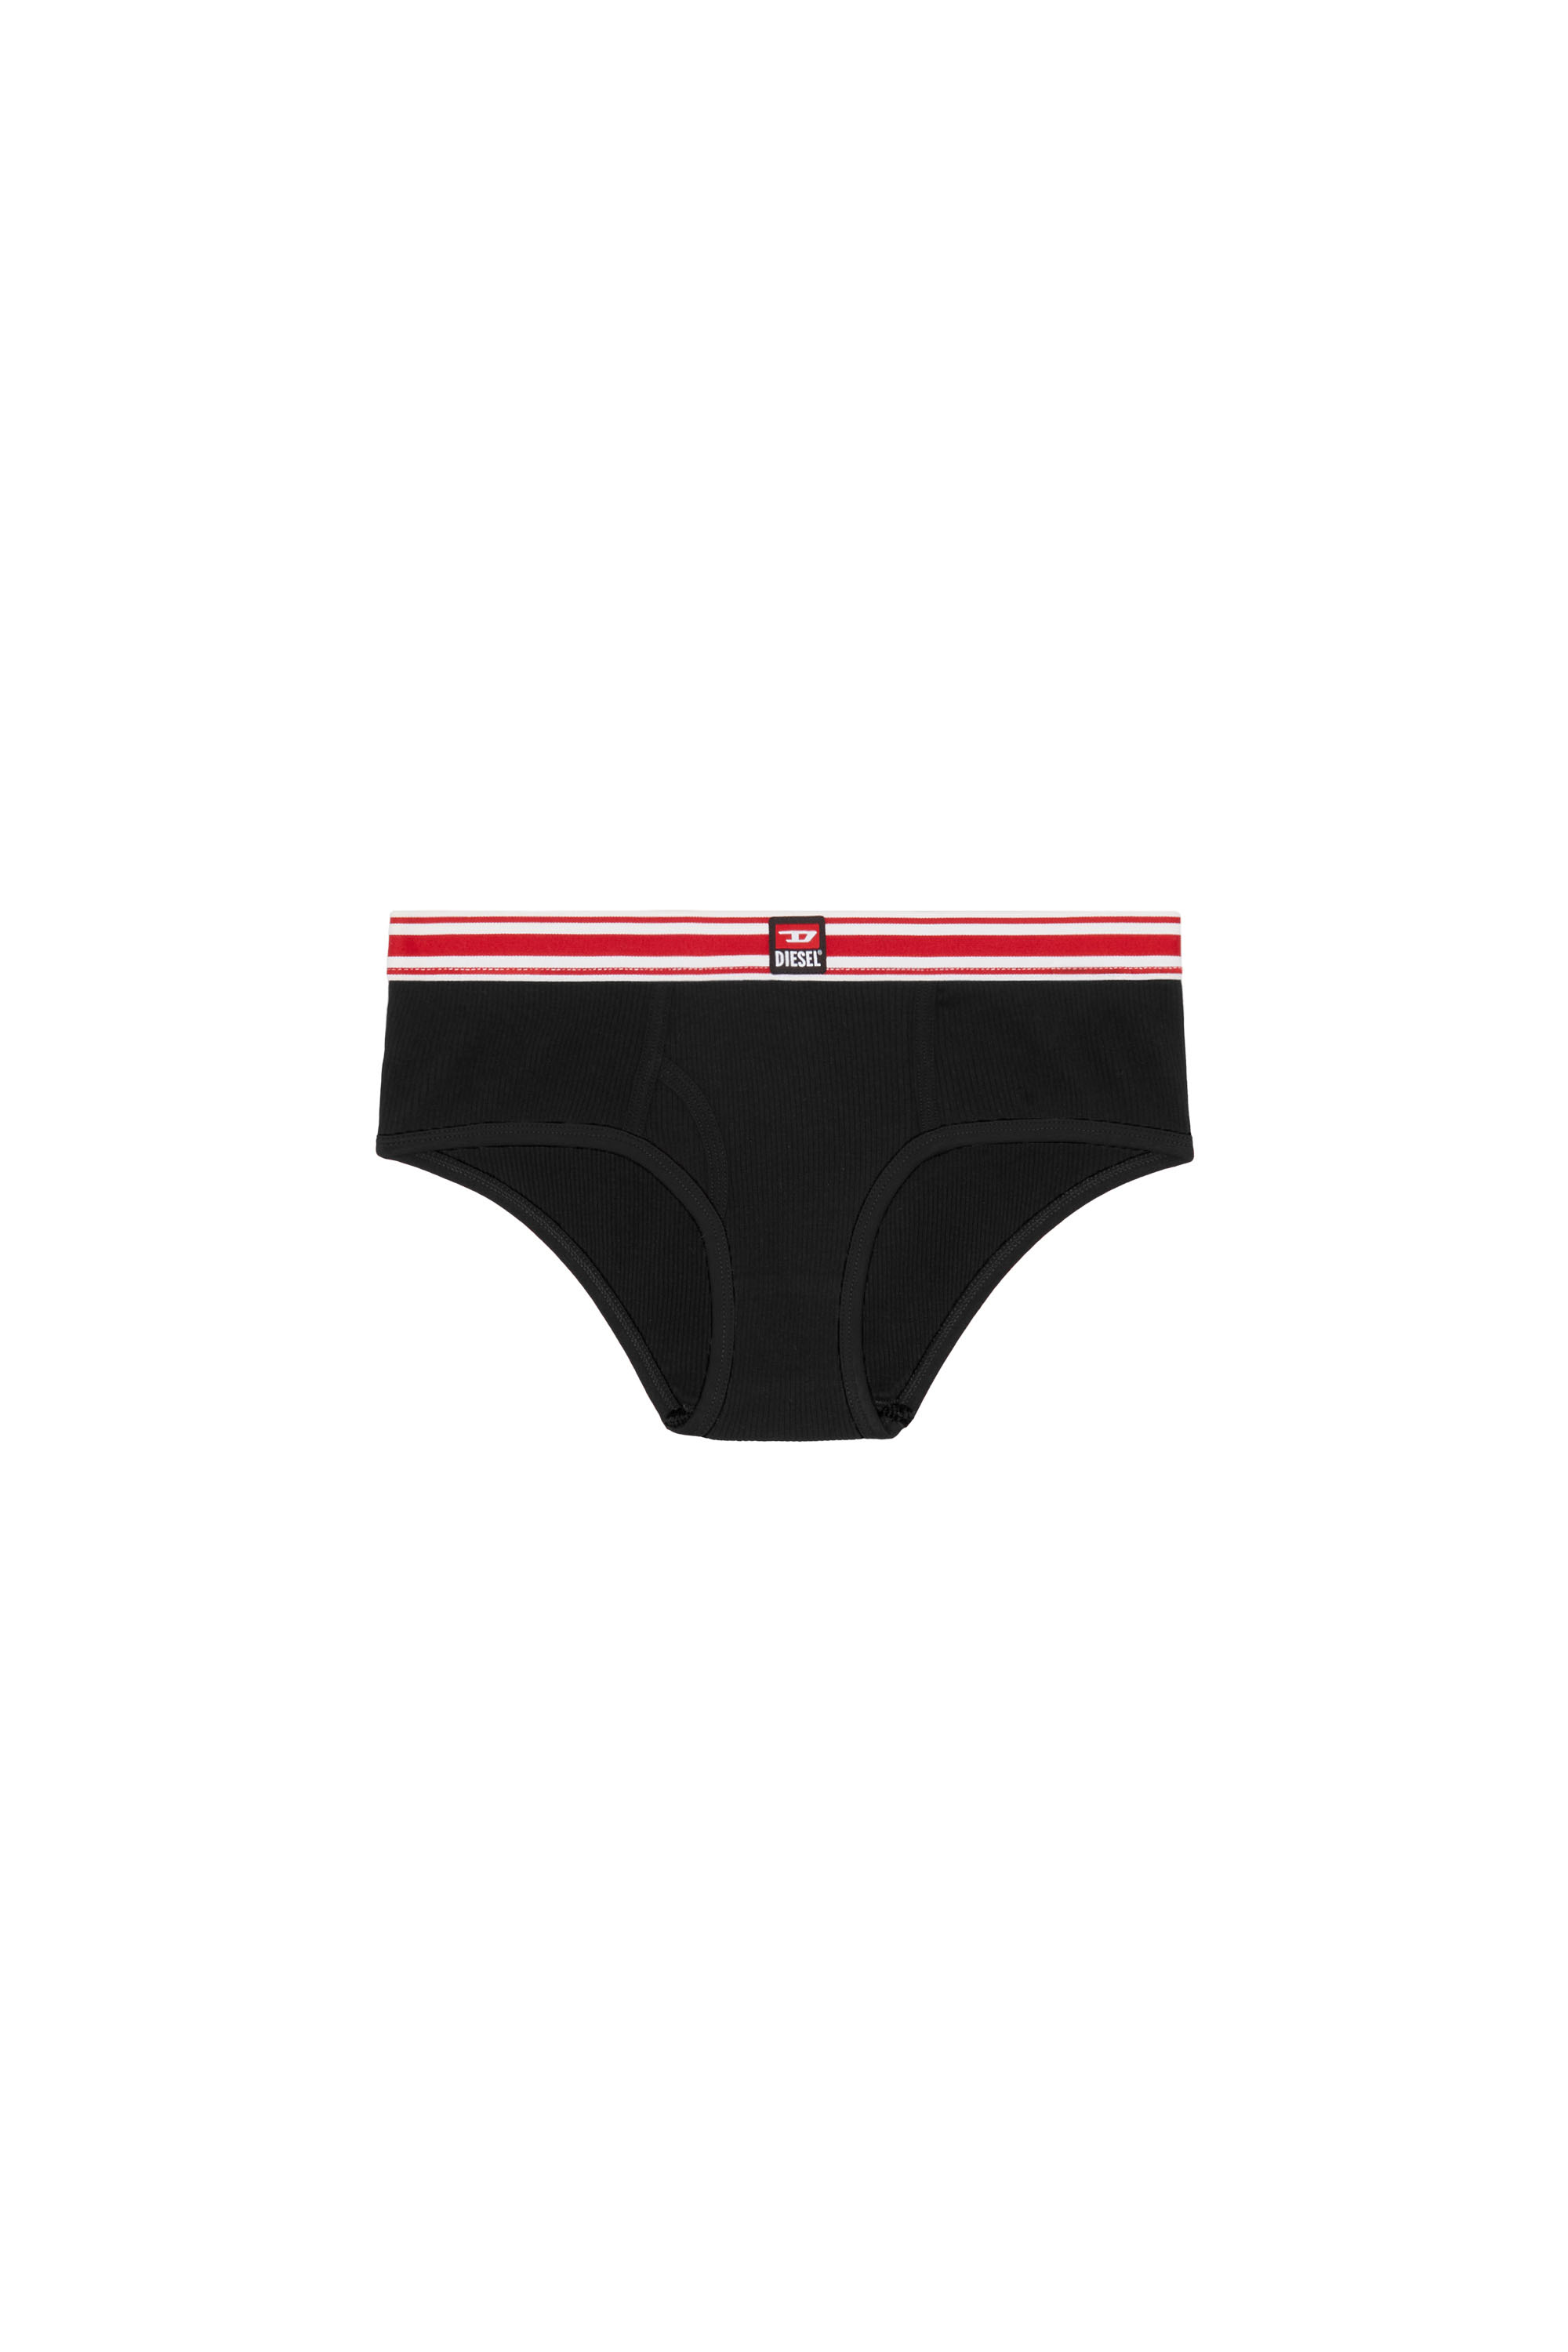 UFPN-OXYS-C, Black/Red - Panties